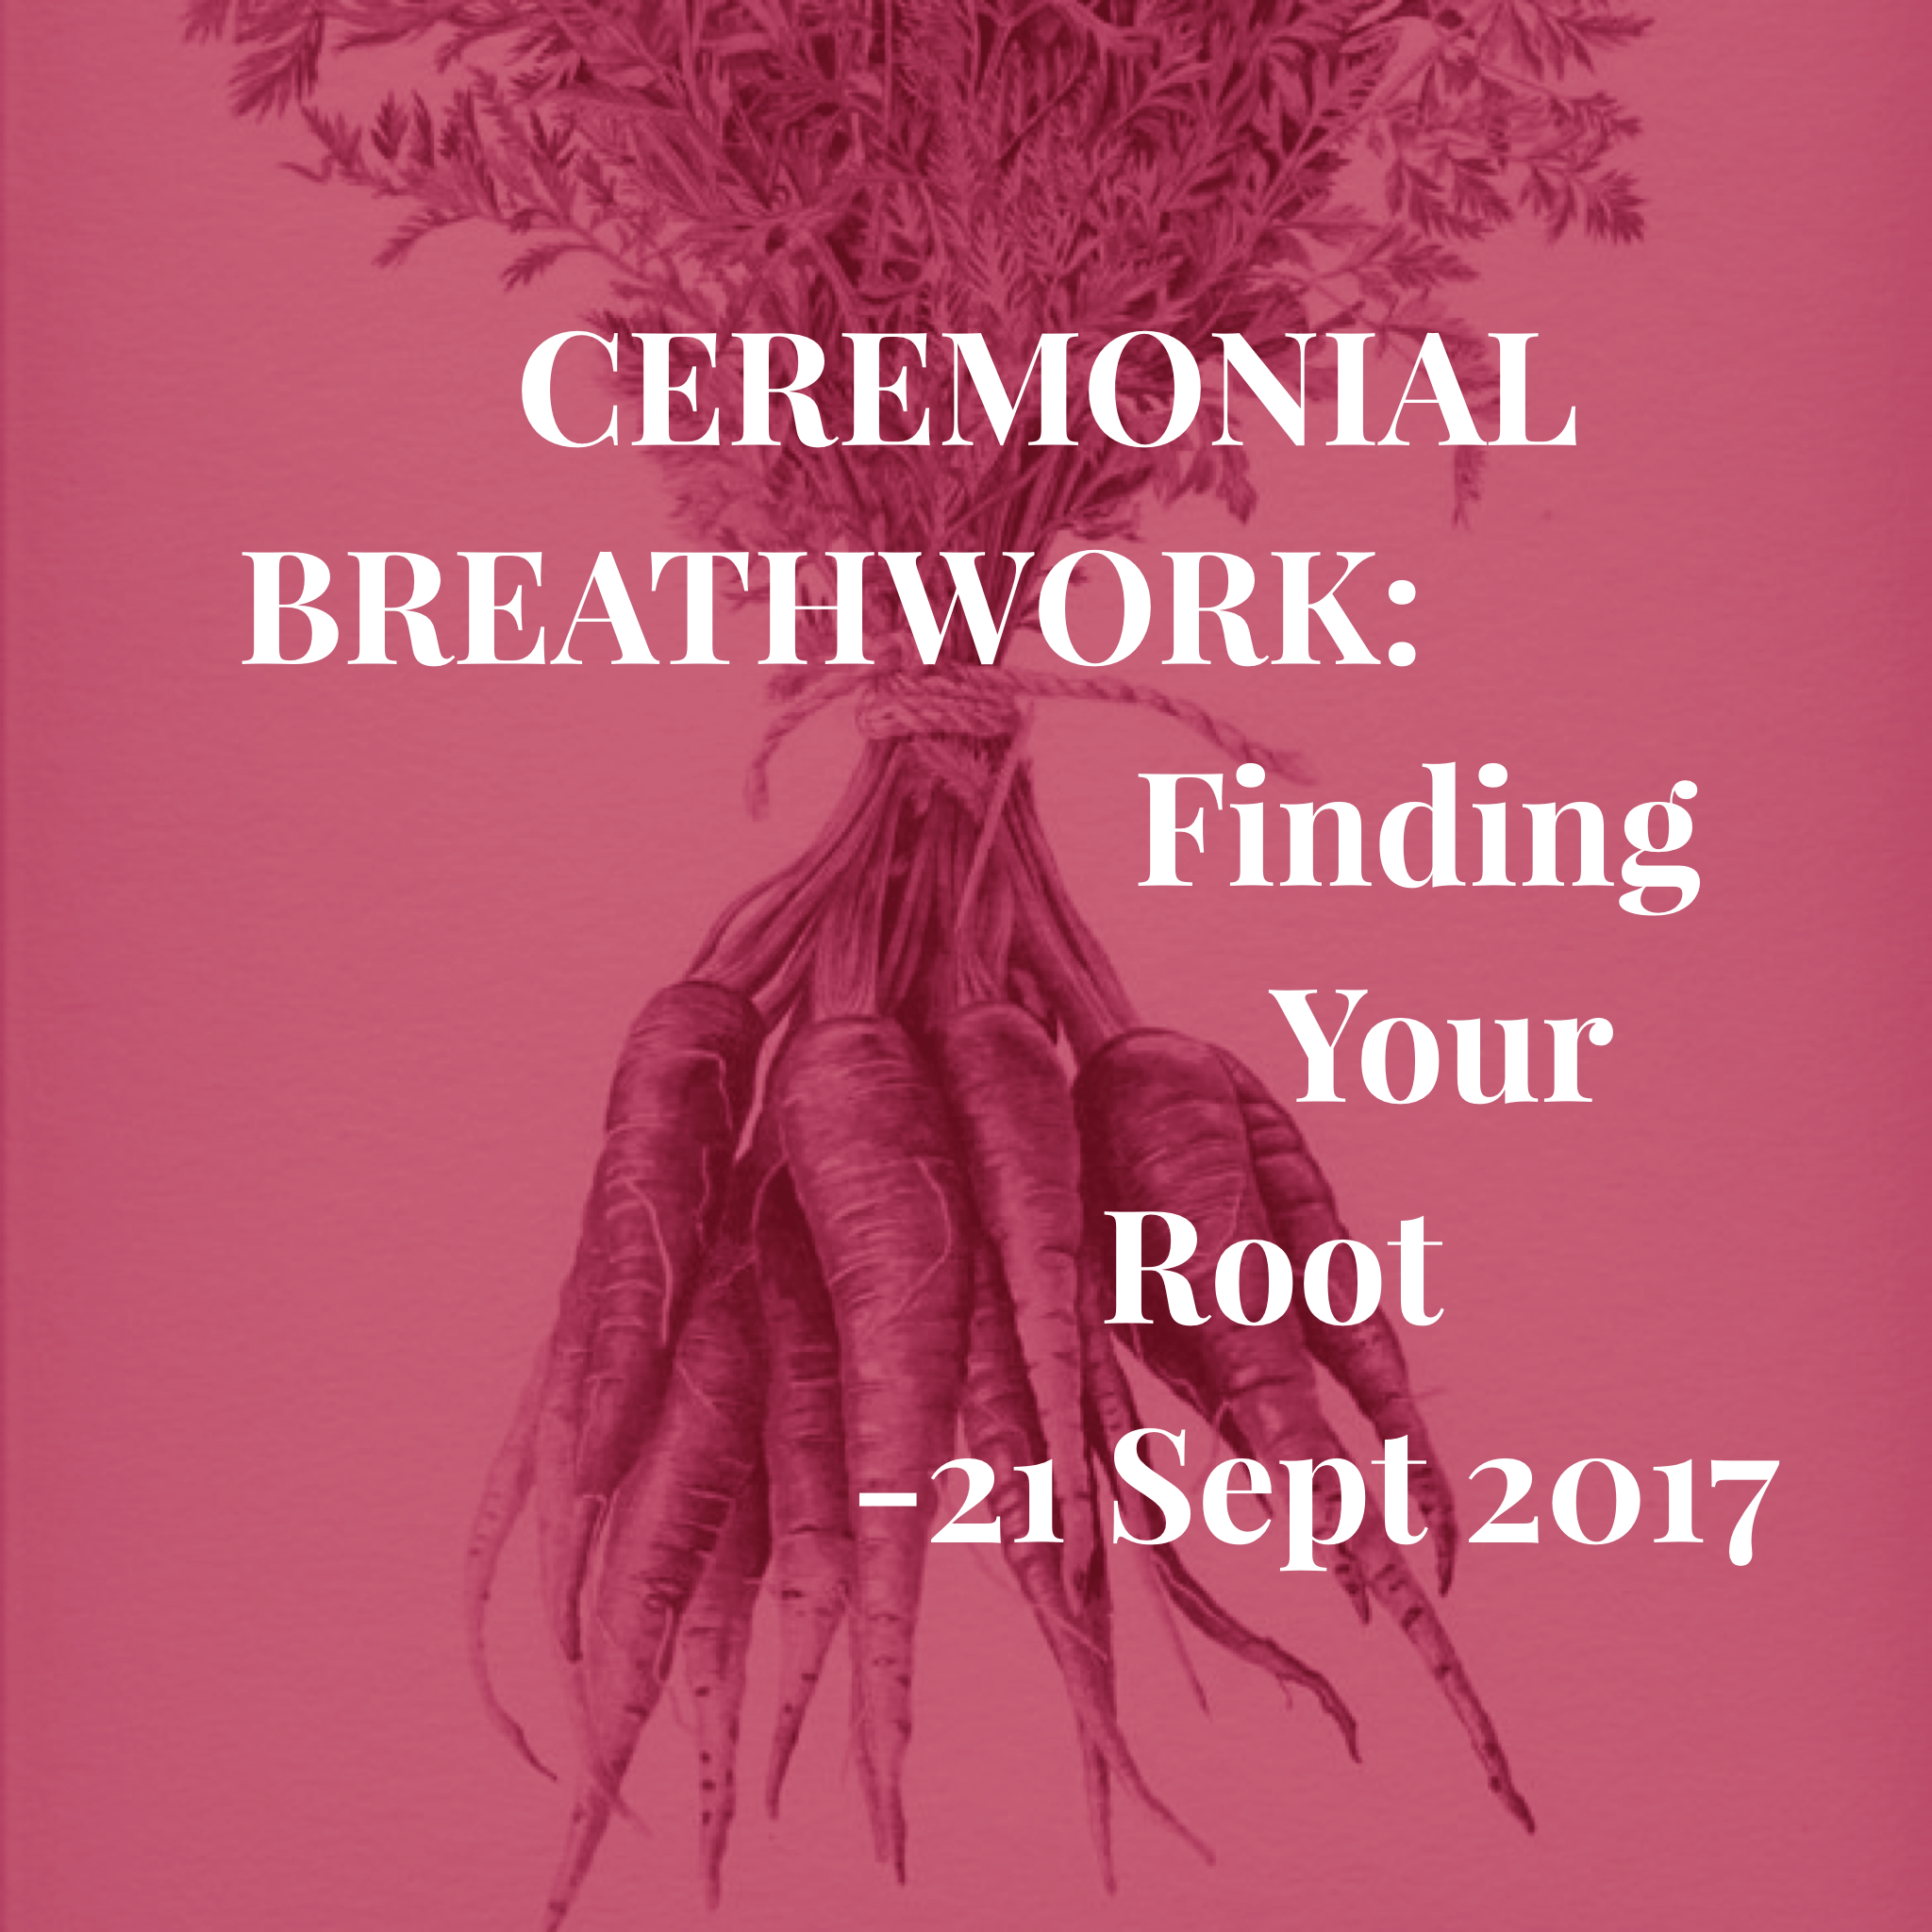 ©Oracle Of Los Angeles, 2017. Ceremonial Breathwork: Finding Your Root, flier.